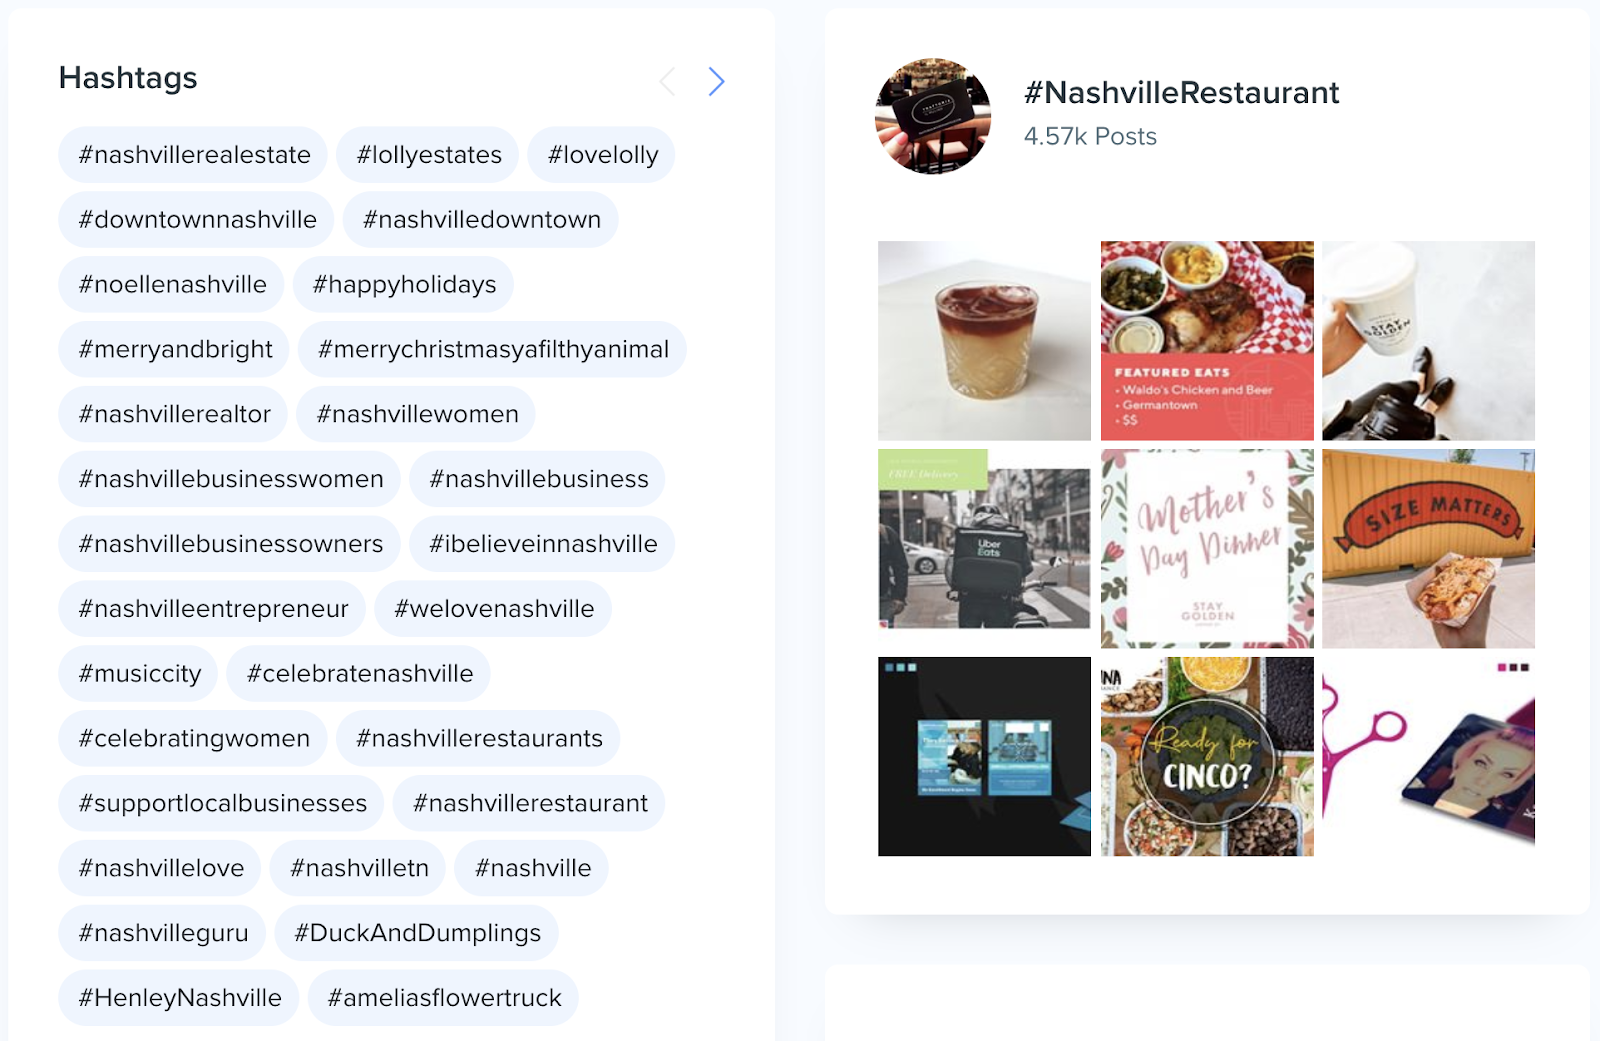 Kicksta hashtag generator- free Instagram business tools